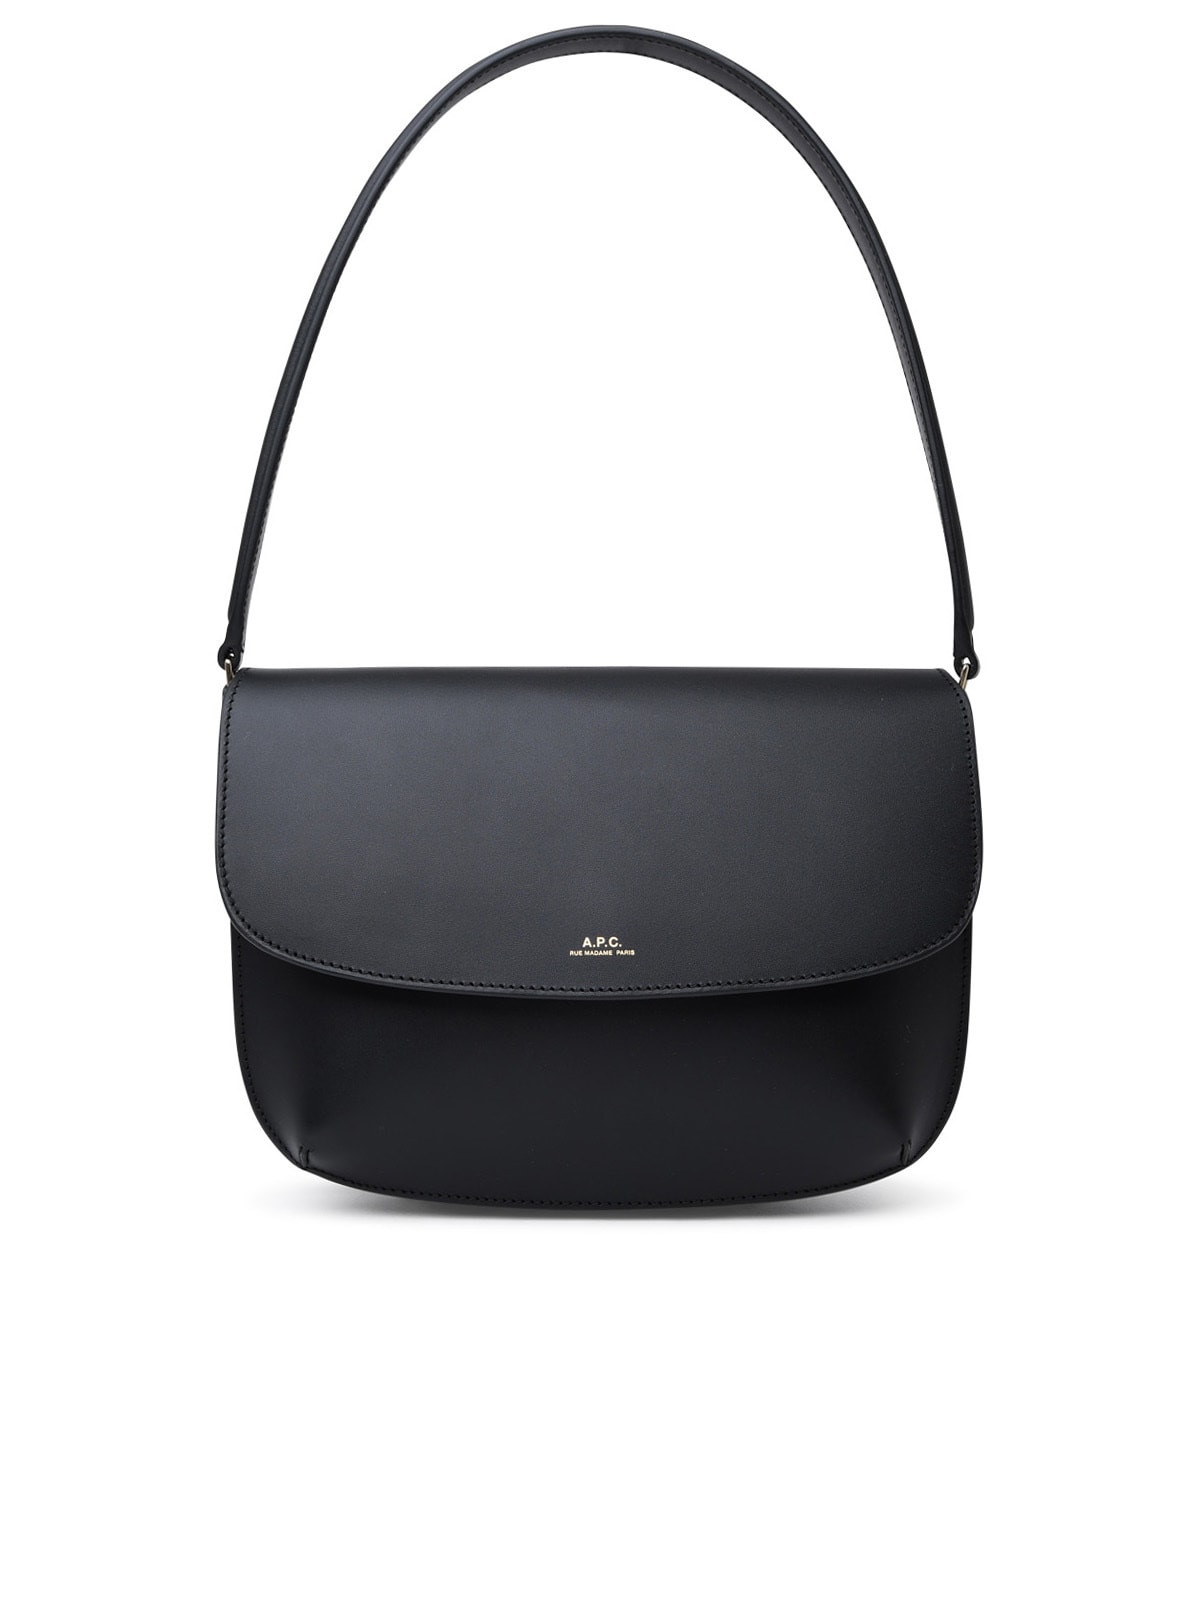 Apc Sarah Leather Shoulder Bag In Black